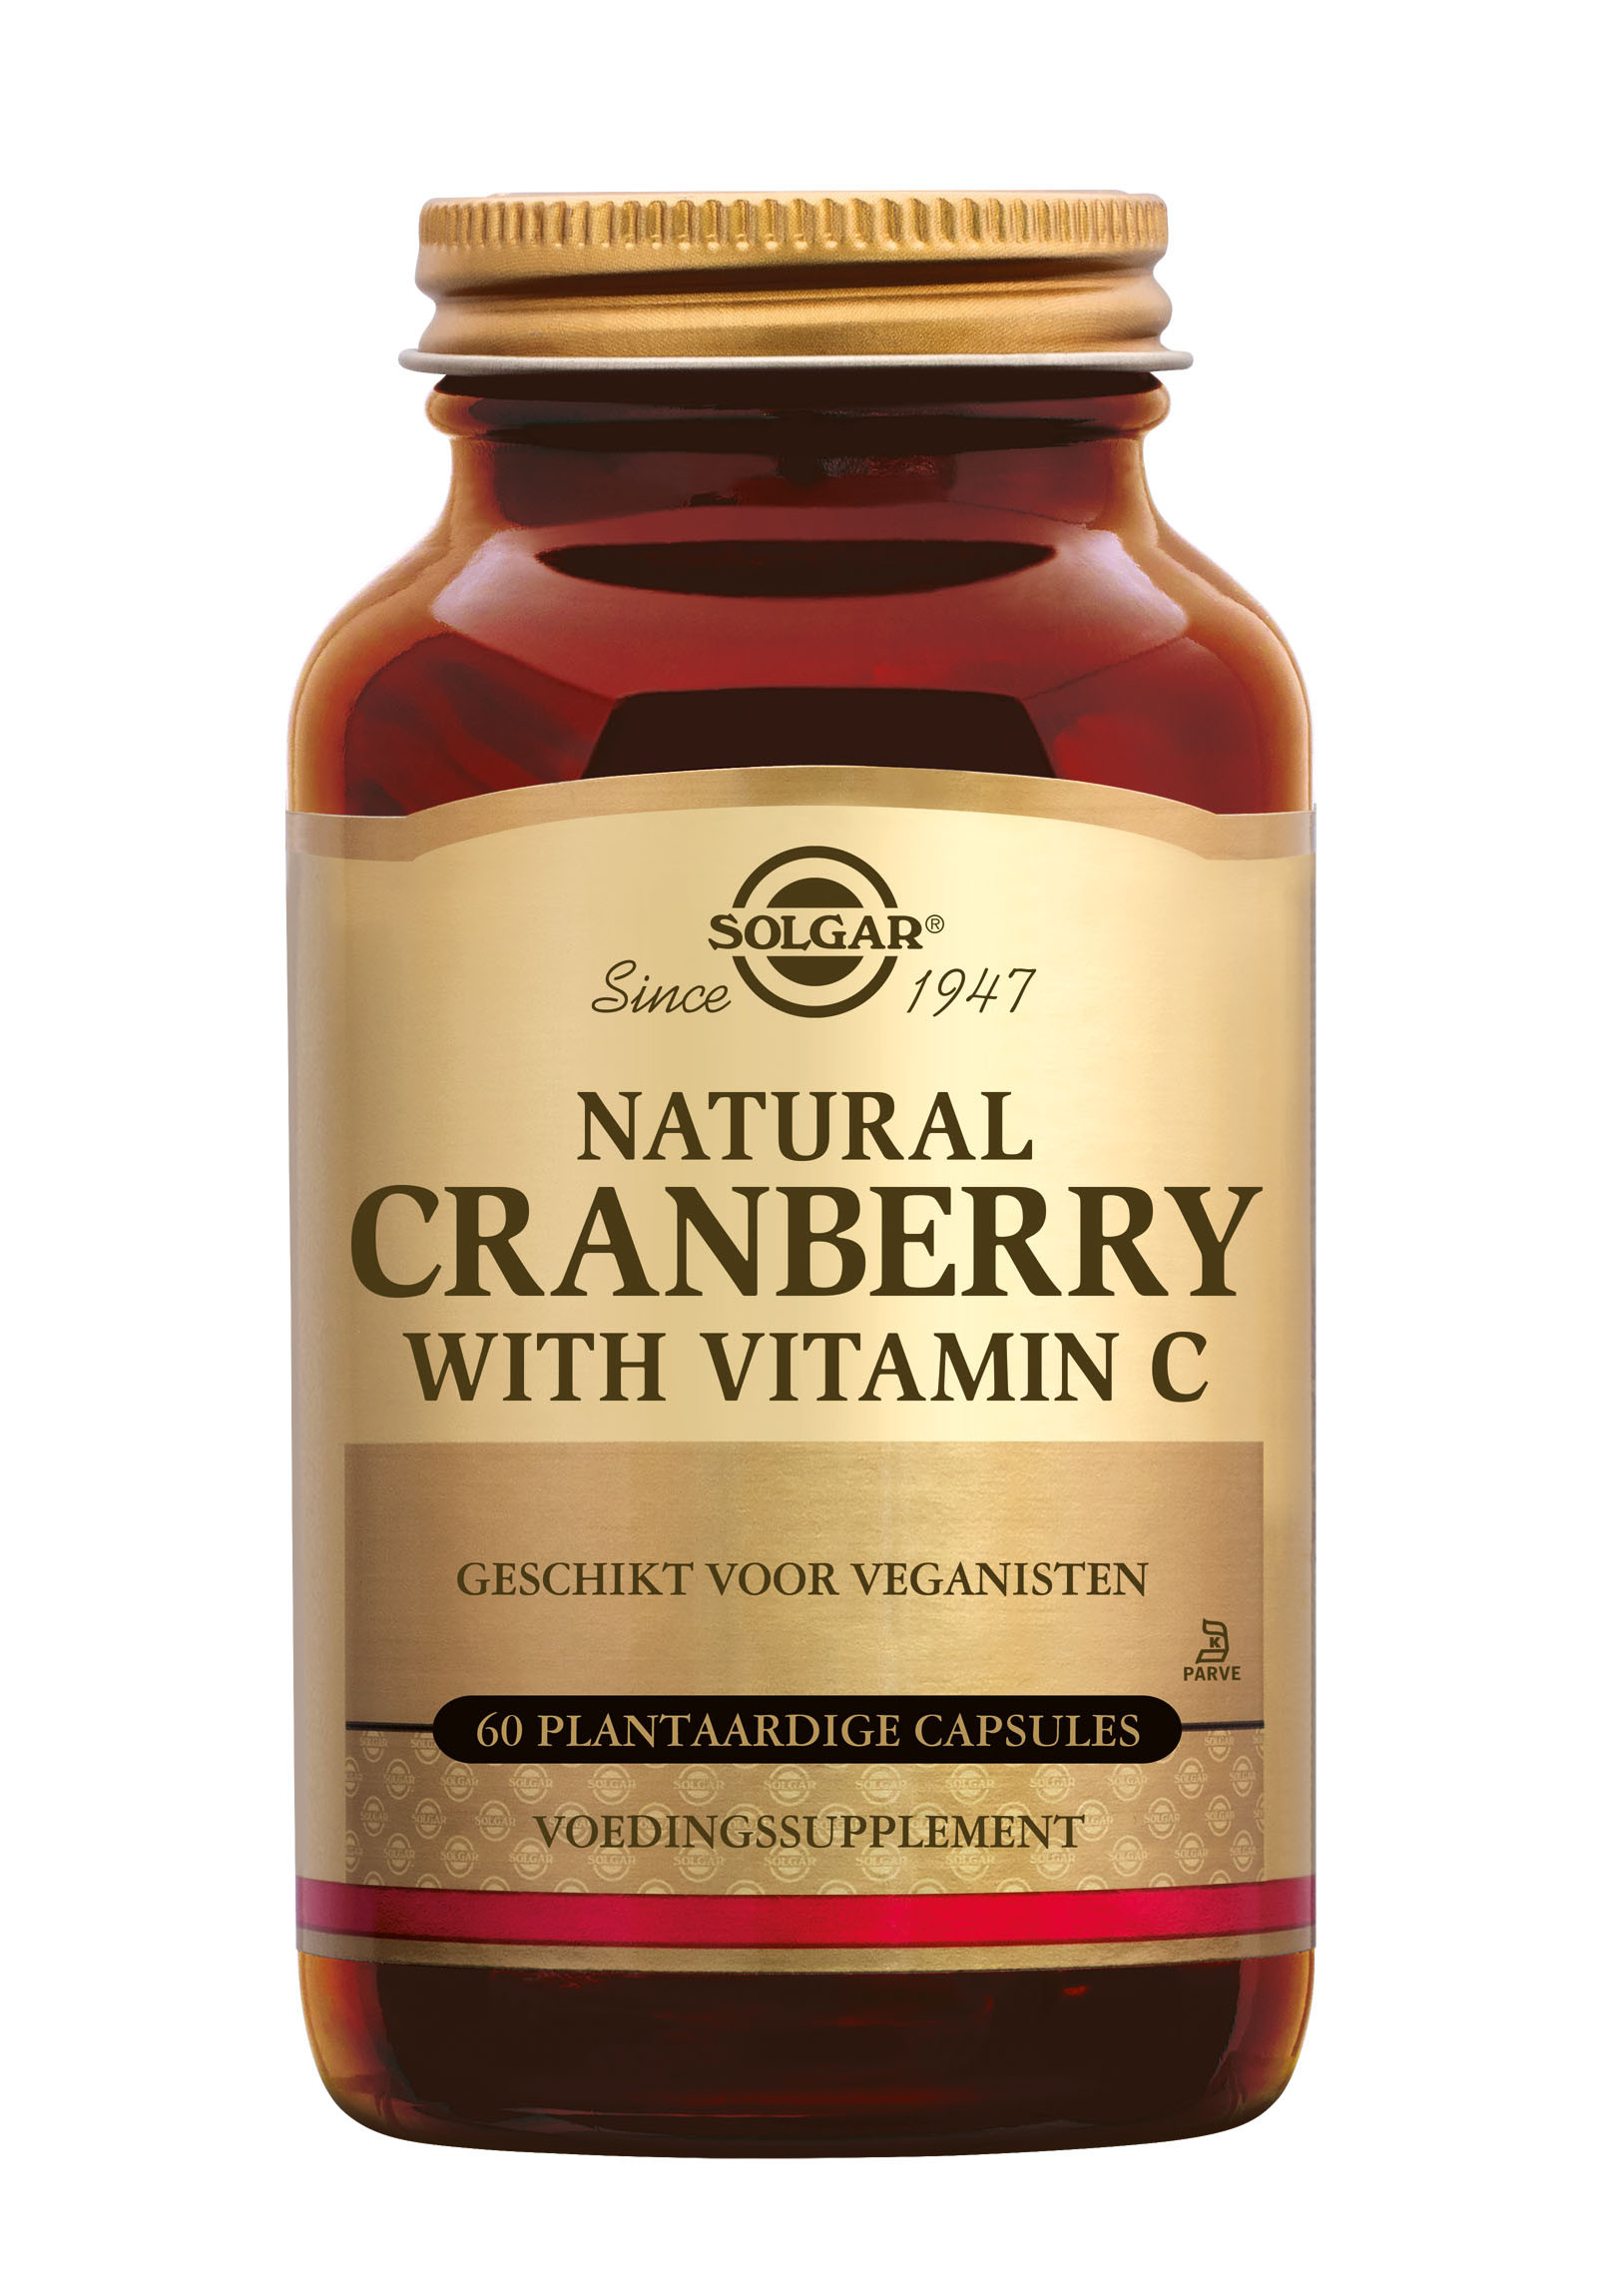 Solgar Cranberry with Vitamin C 60 plantaardige capsules